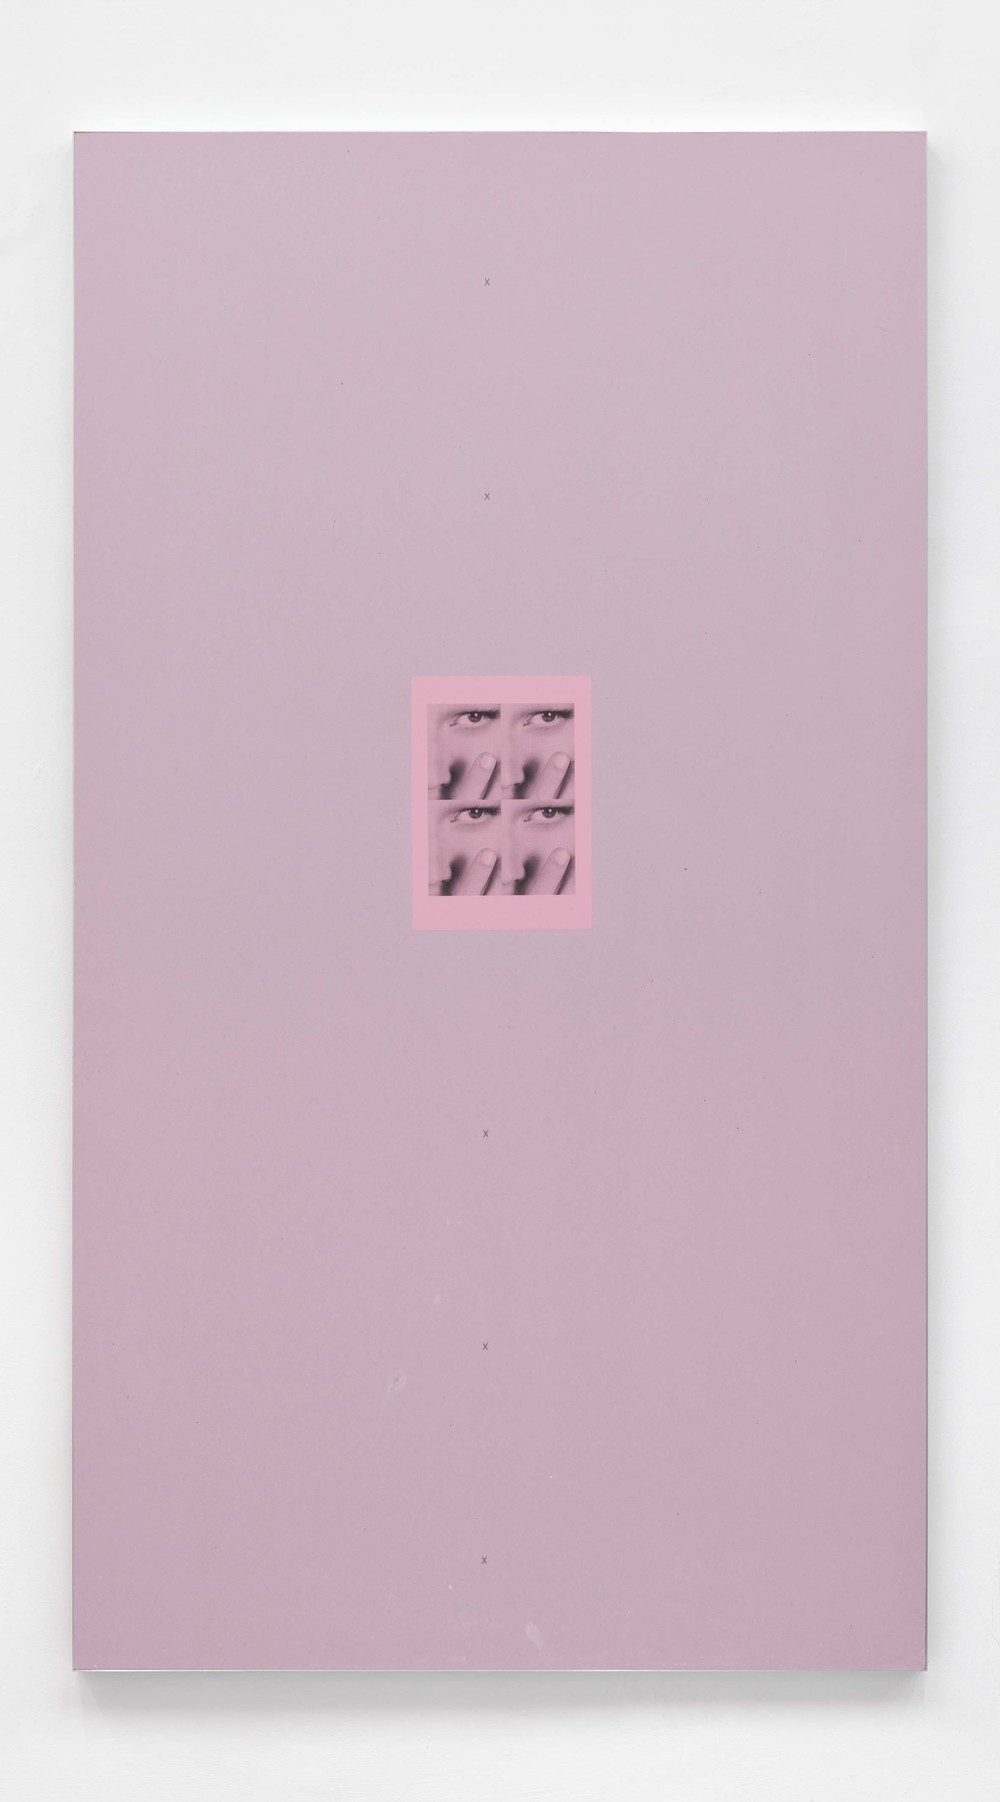 Nick Oberthaler, Untitled, 2015